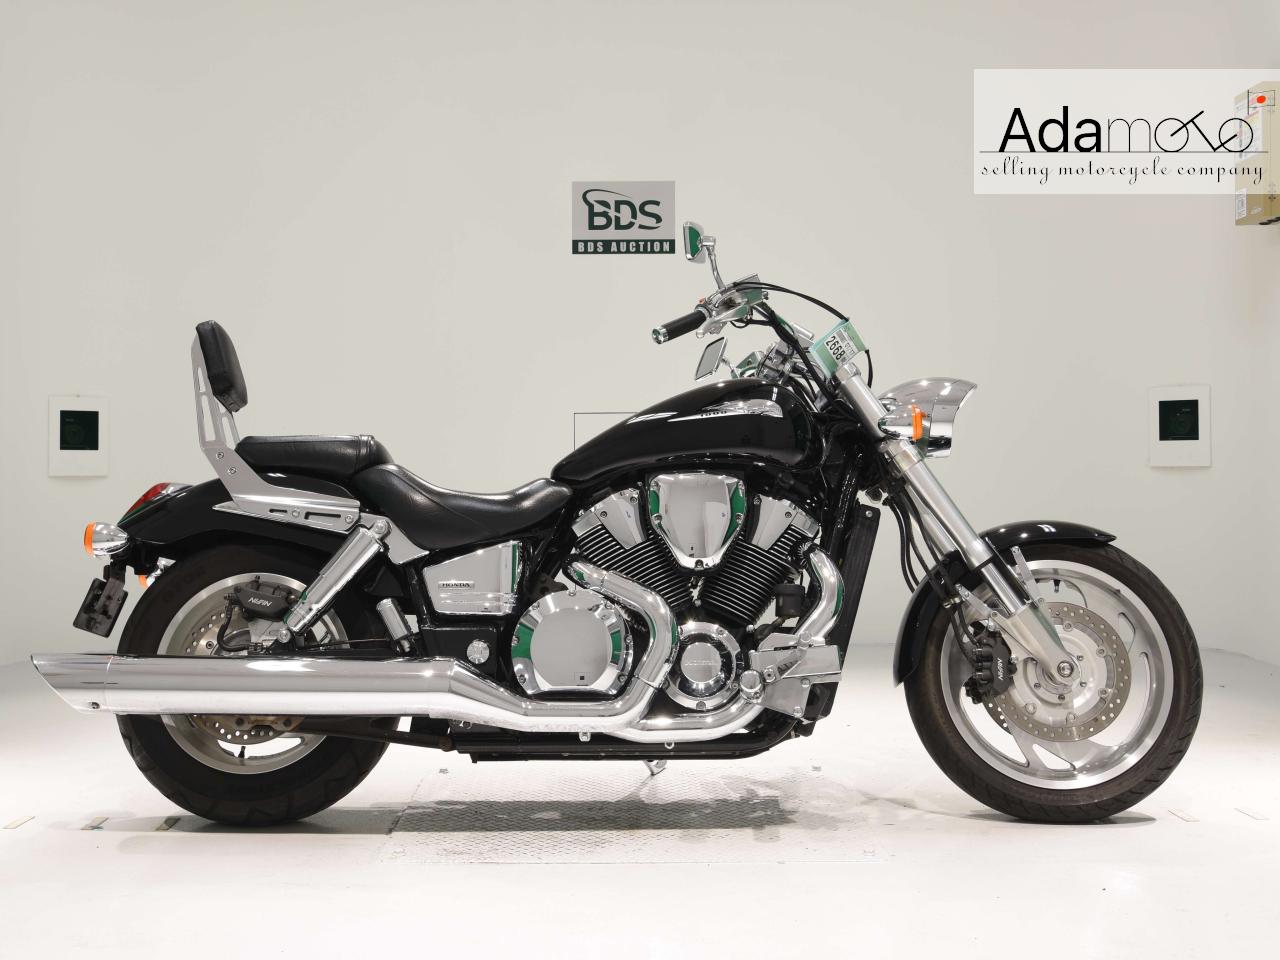 Honda VTX1800 - Adamoto - Motorcycles from Japan